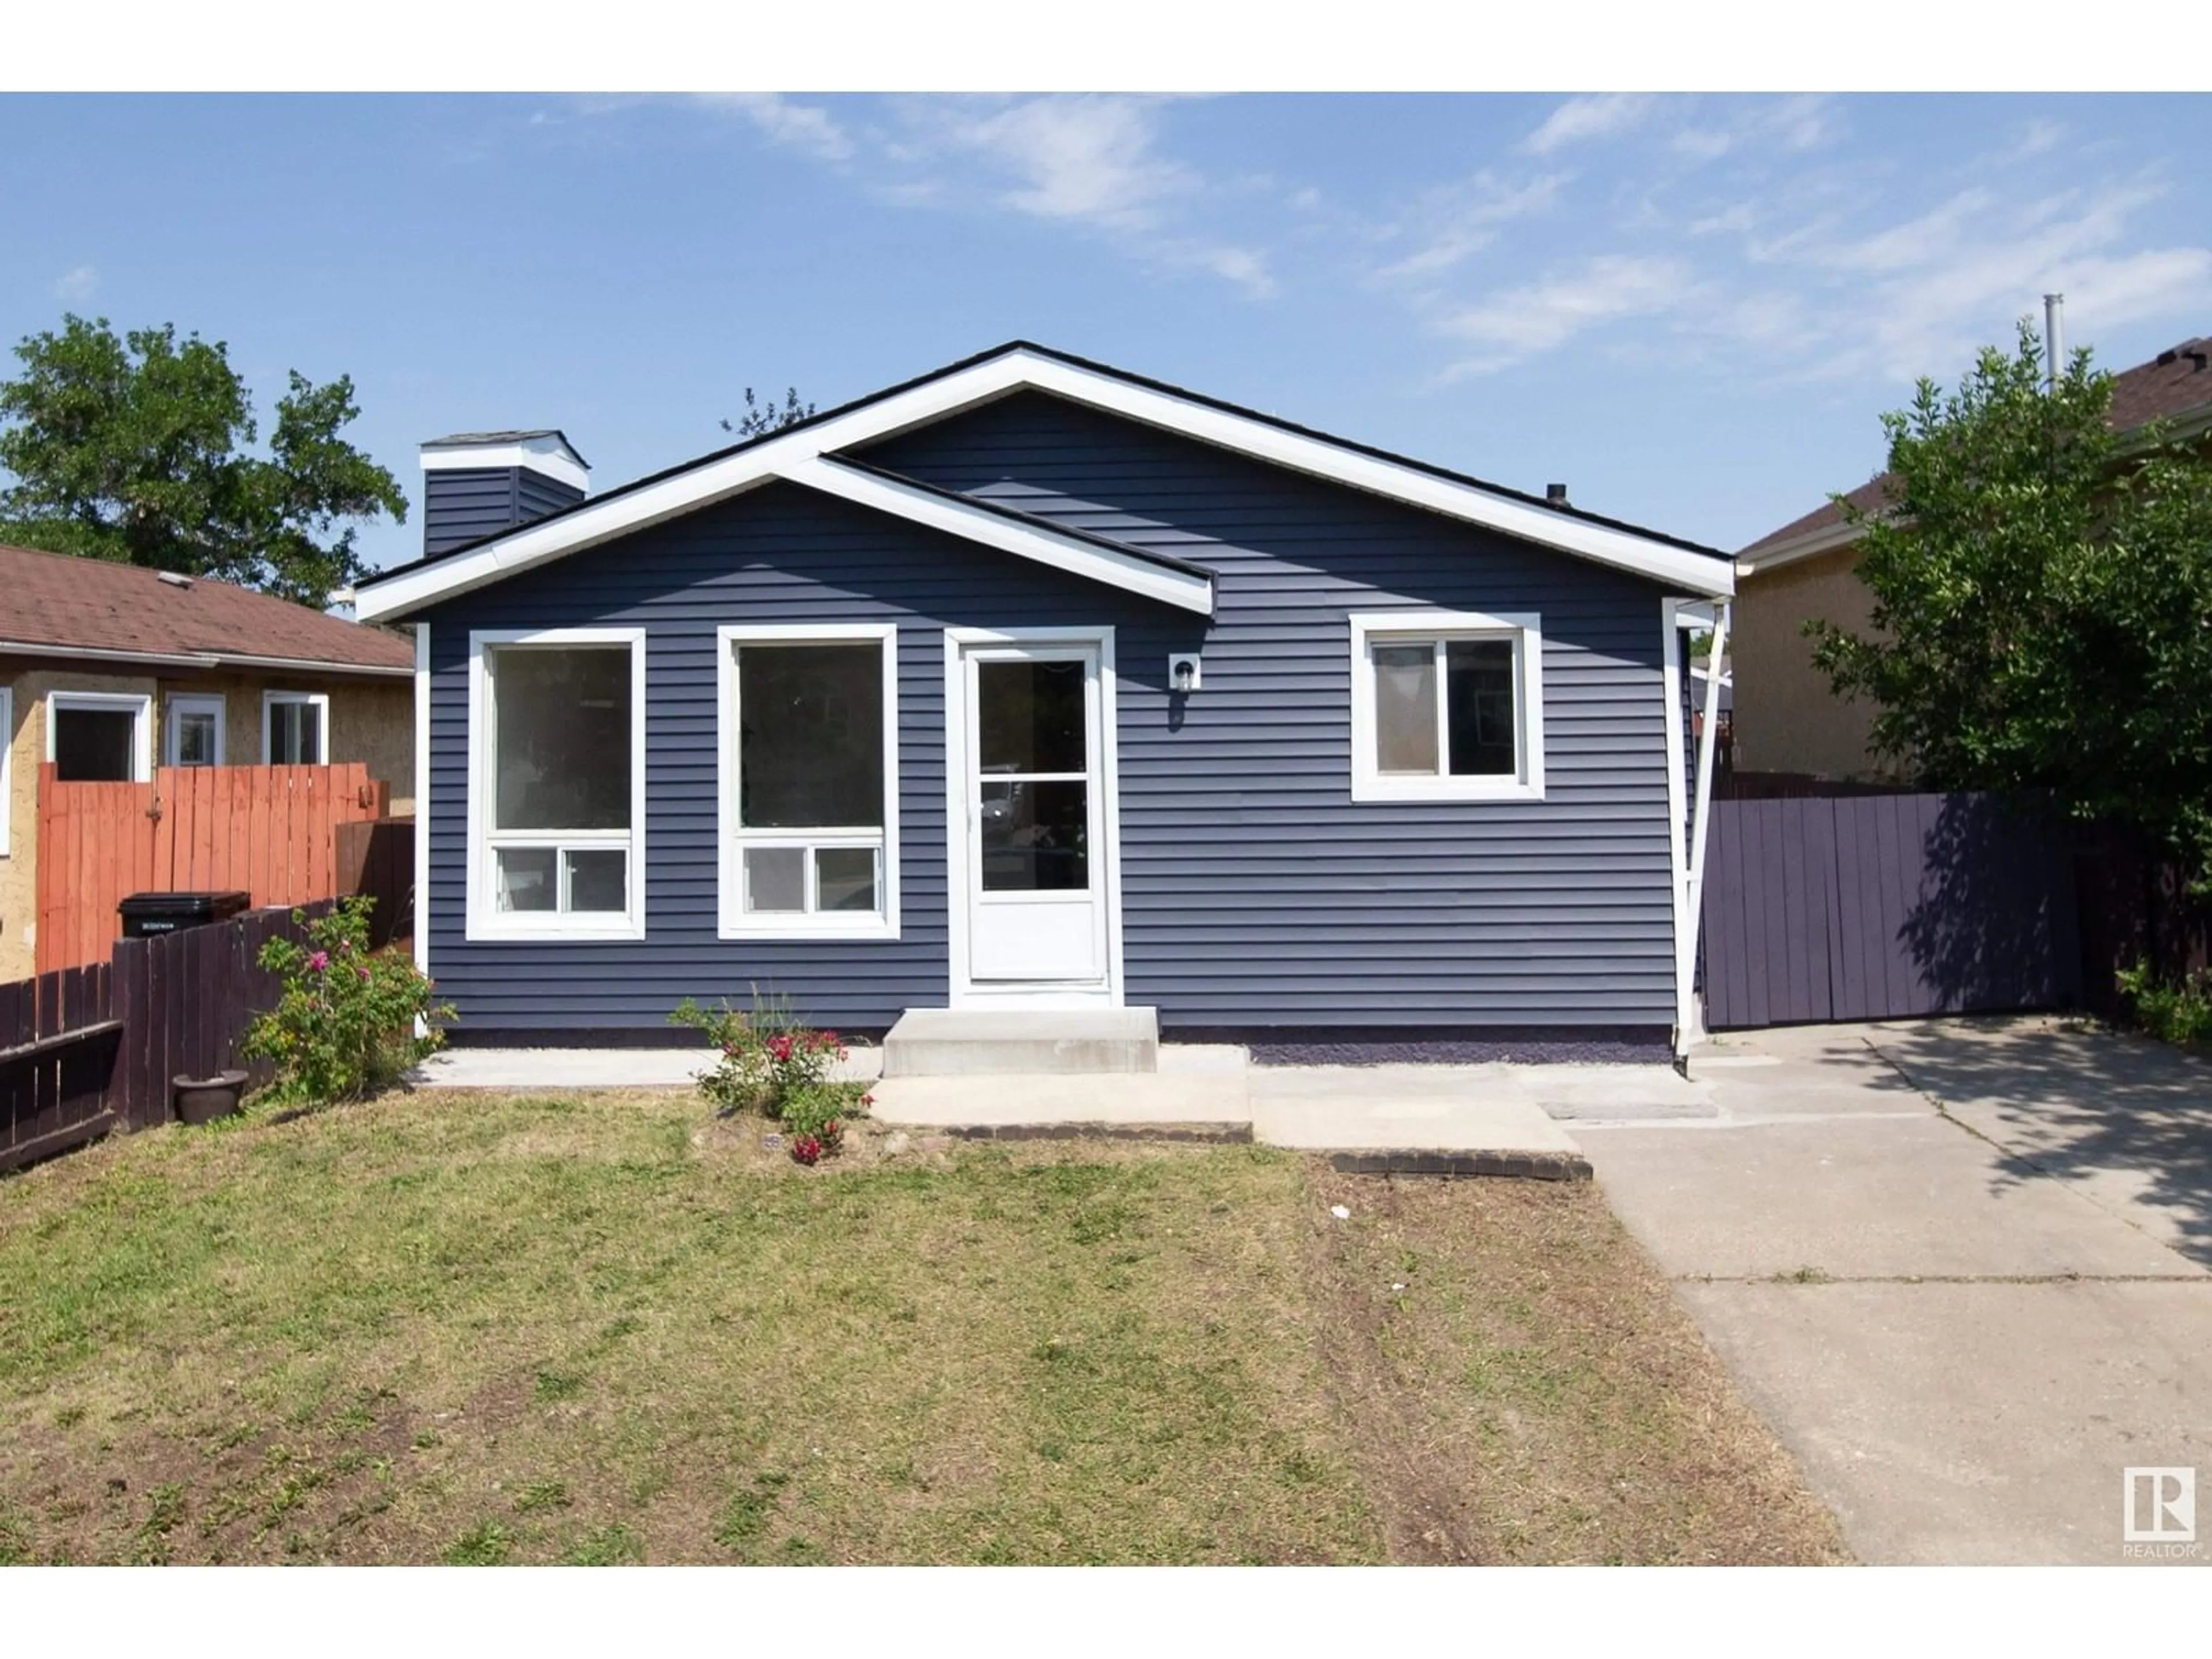 Home with vinyl exterior material for 4508 32 AV NW, Edmonton Alberta T6L4W7